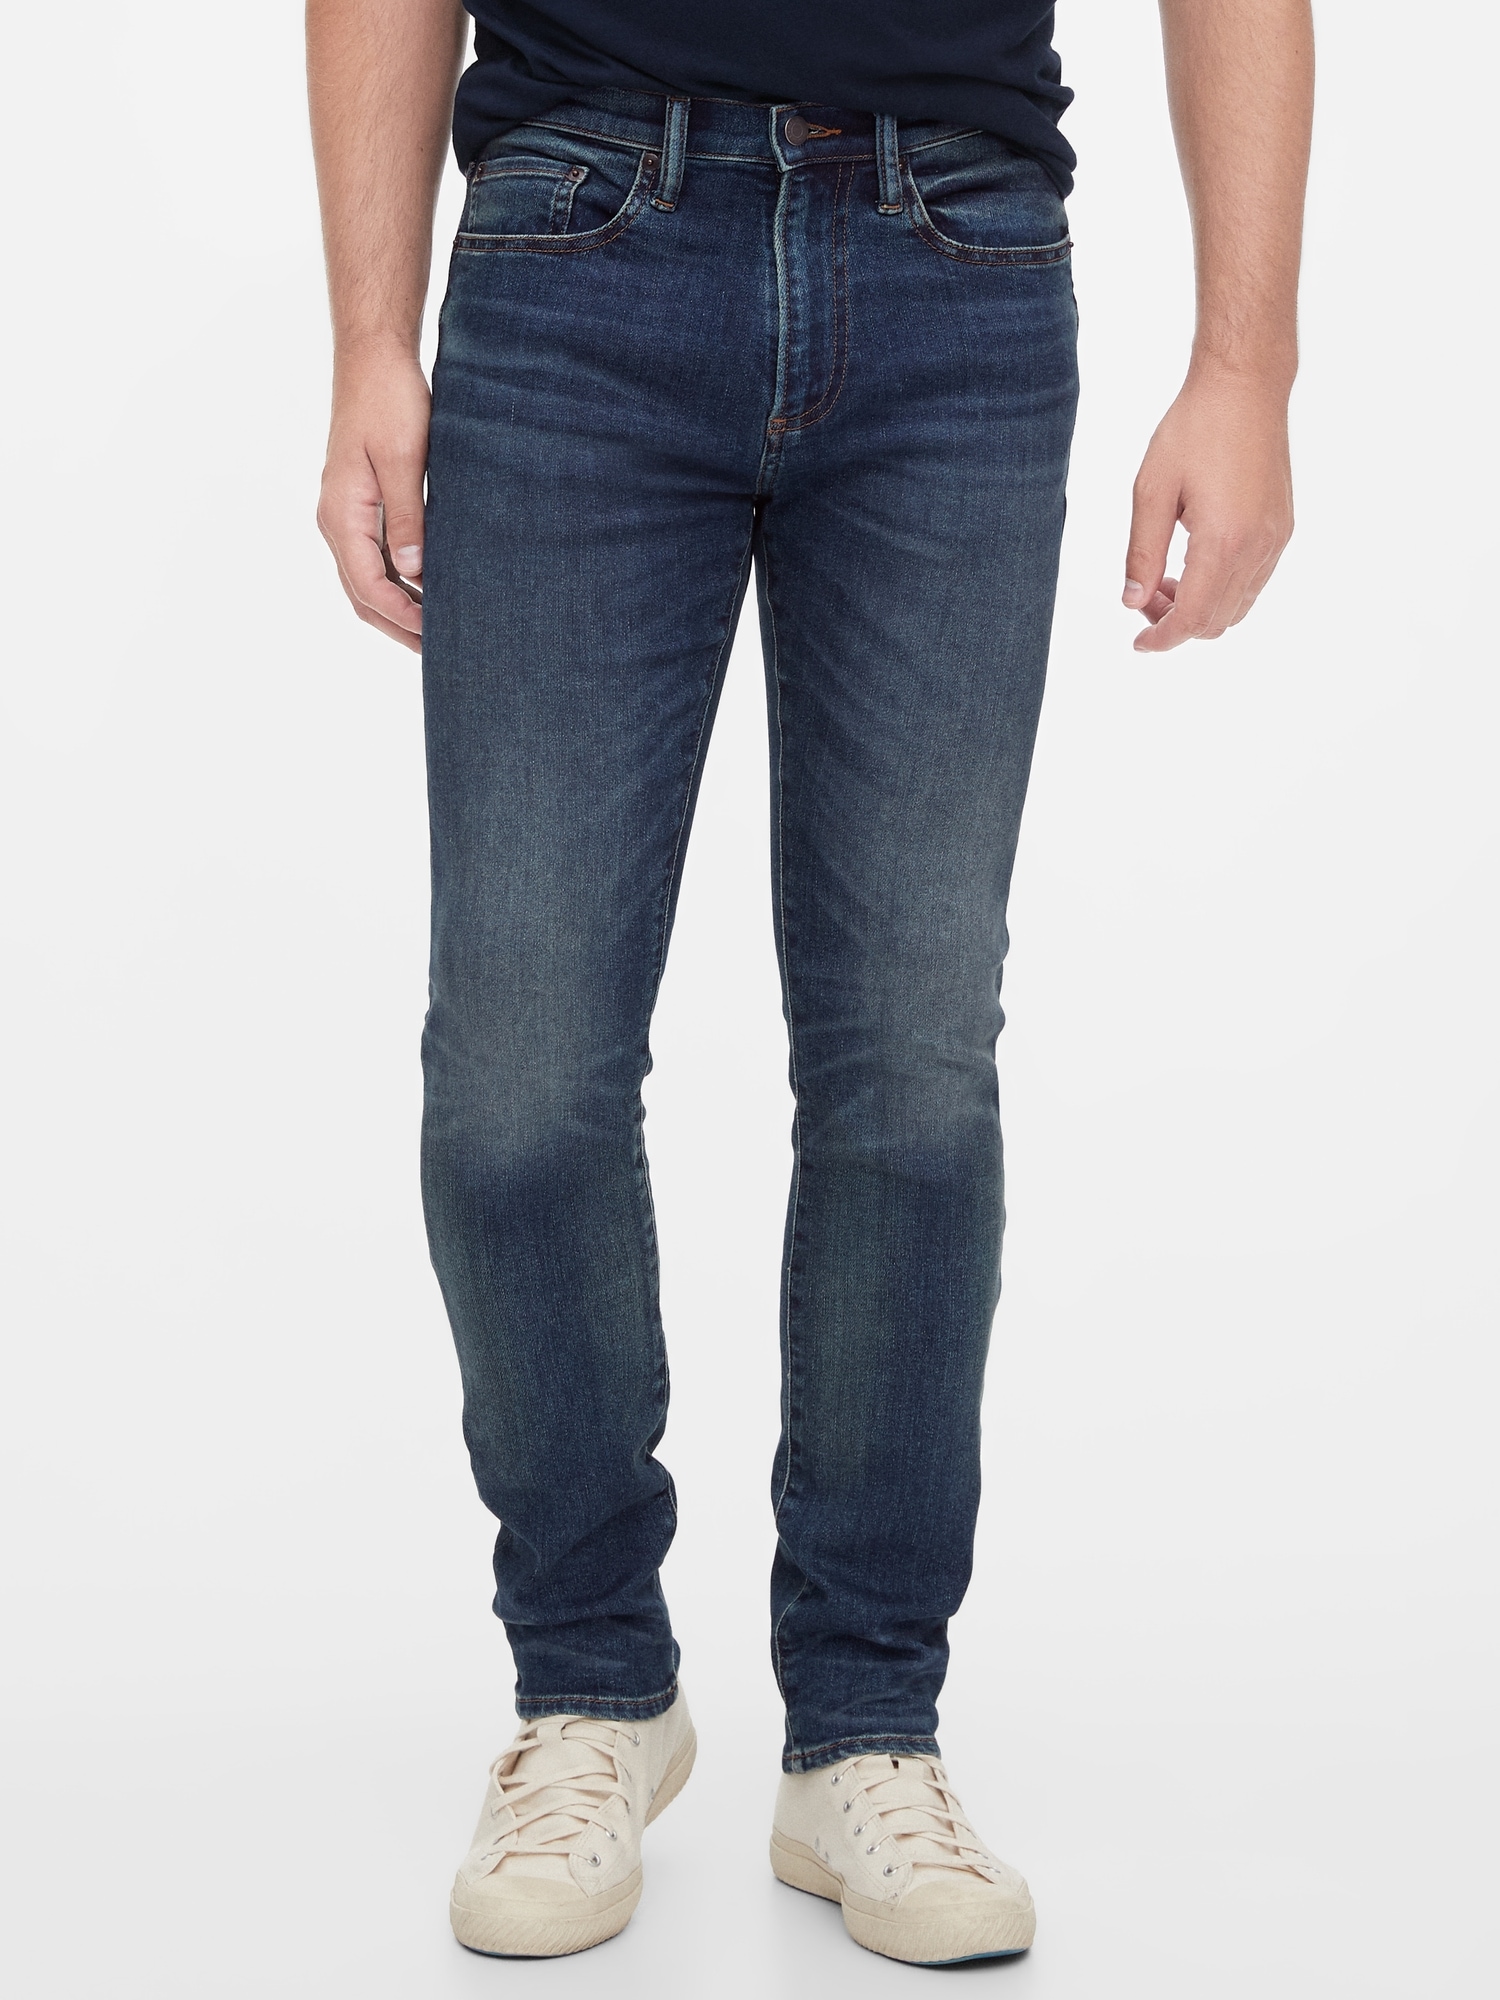 Soft Wear Max Skinny GapFlex Jeans with Washwell™